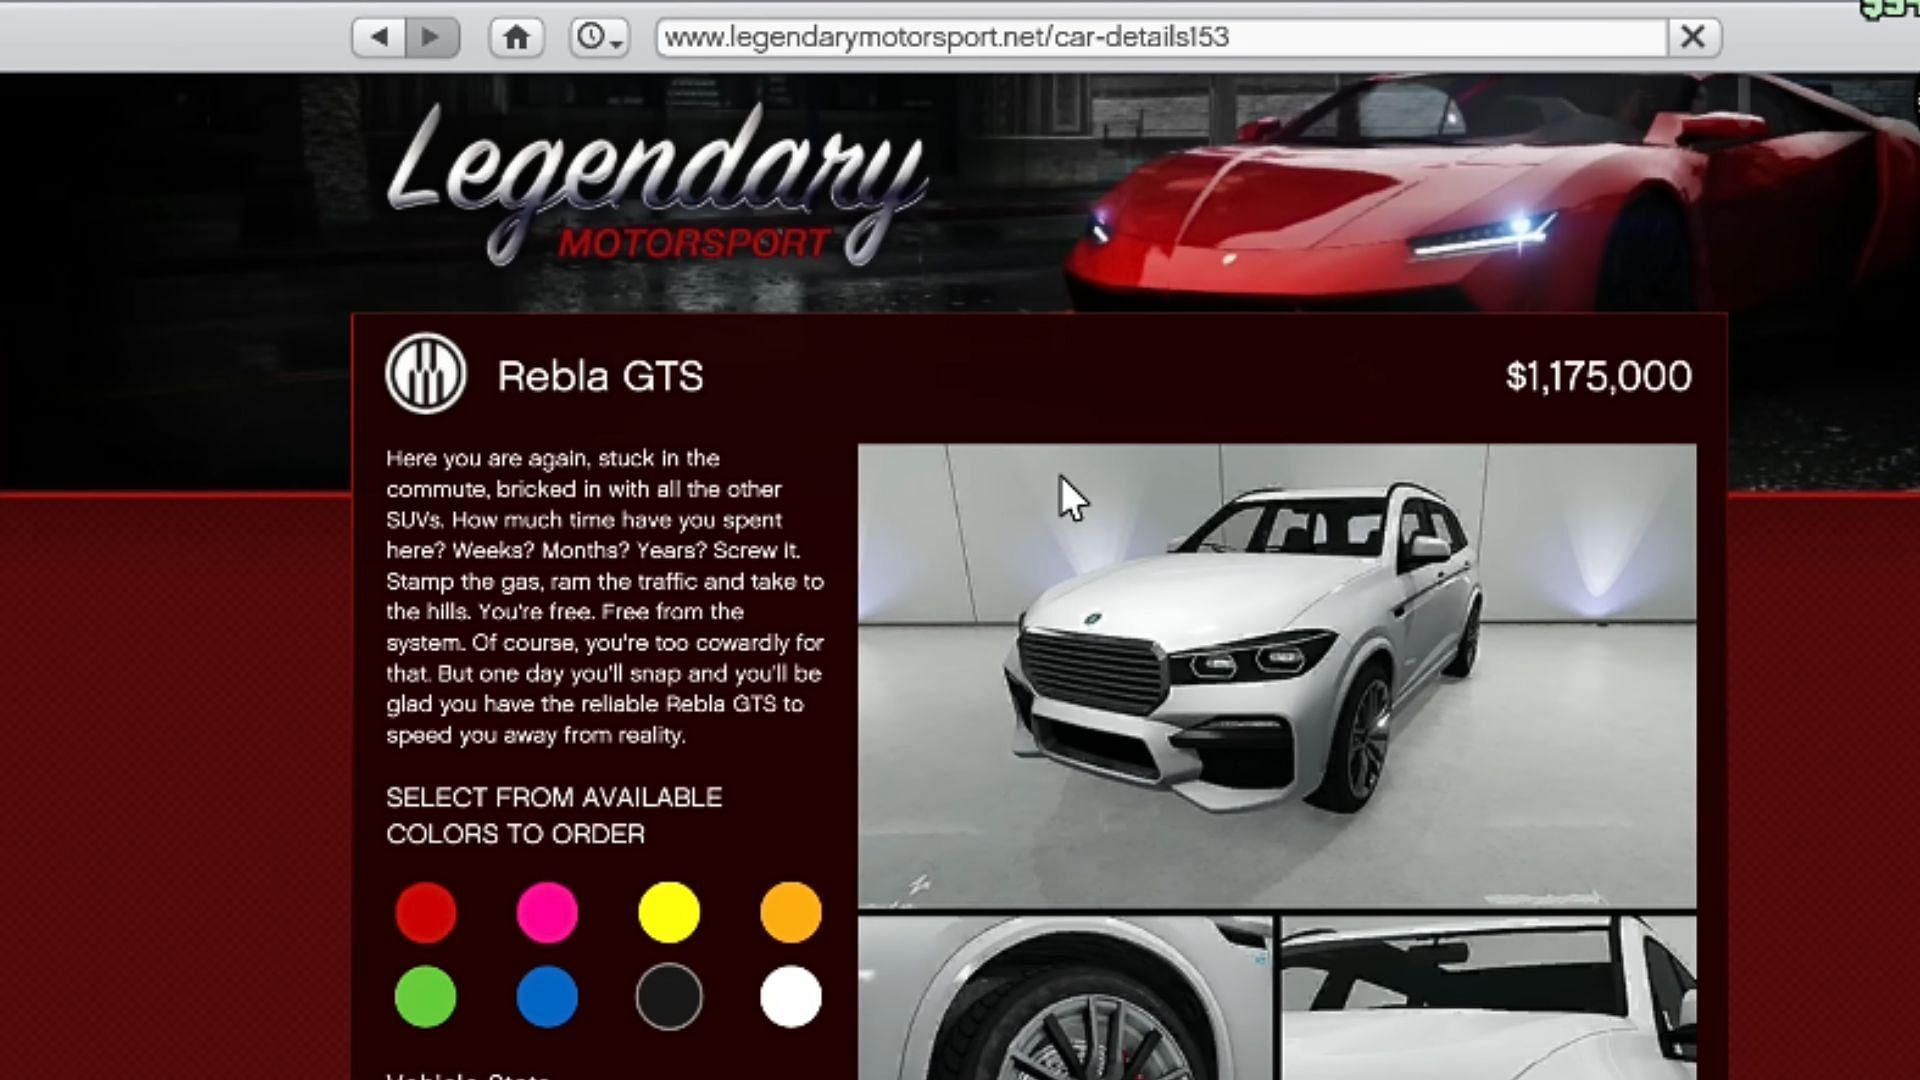 Rebla GTS&#039; page on the Legendary Motorsport website (Image via YouTube/Digital Car Addict)